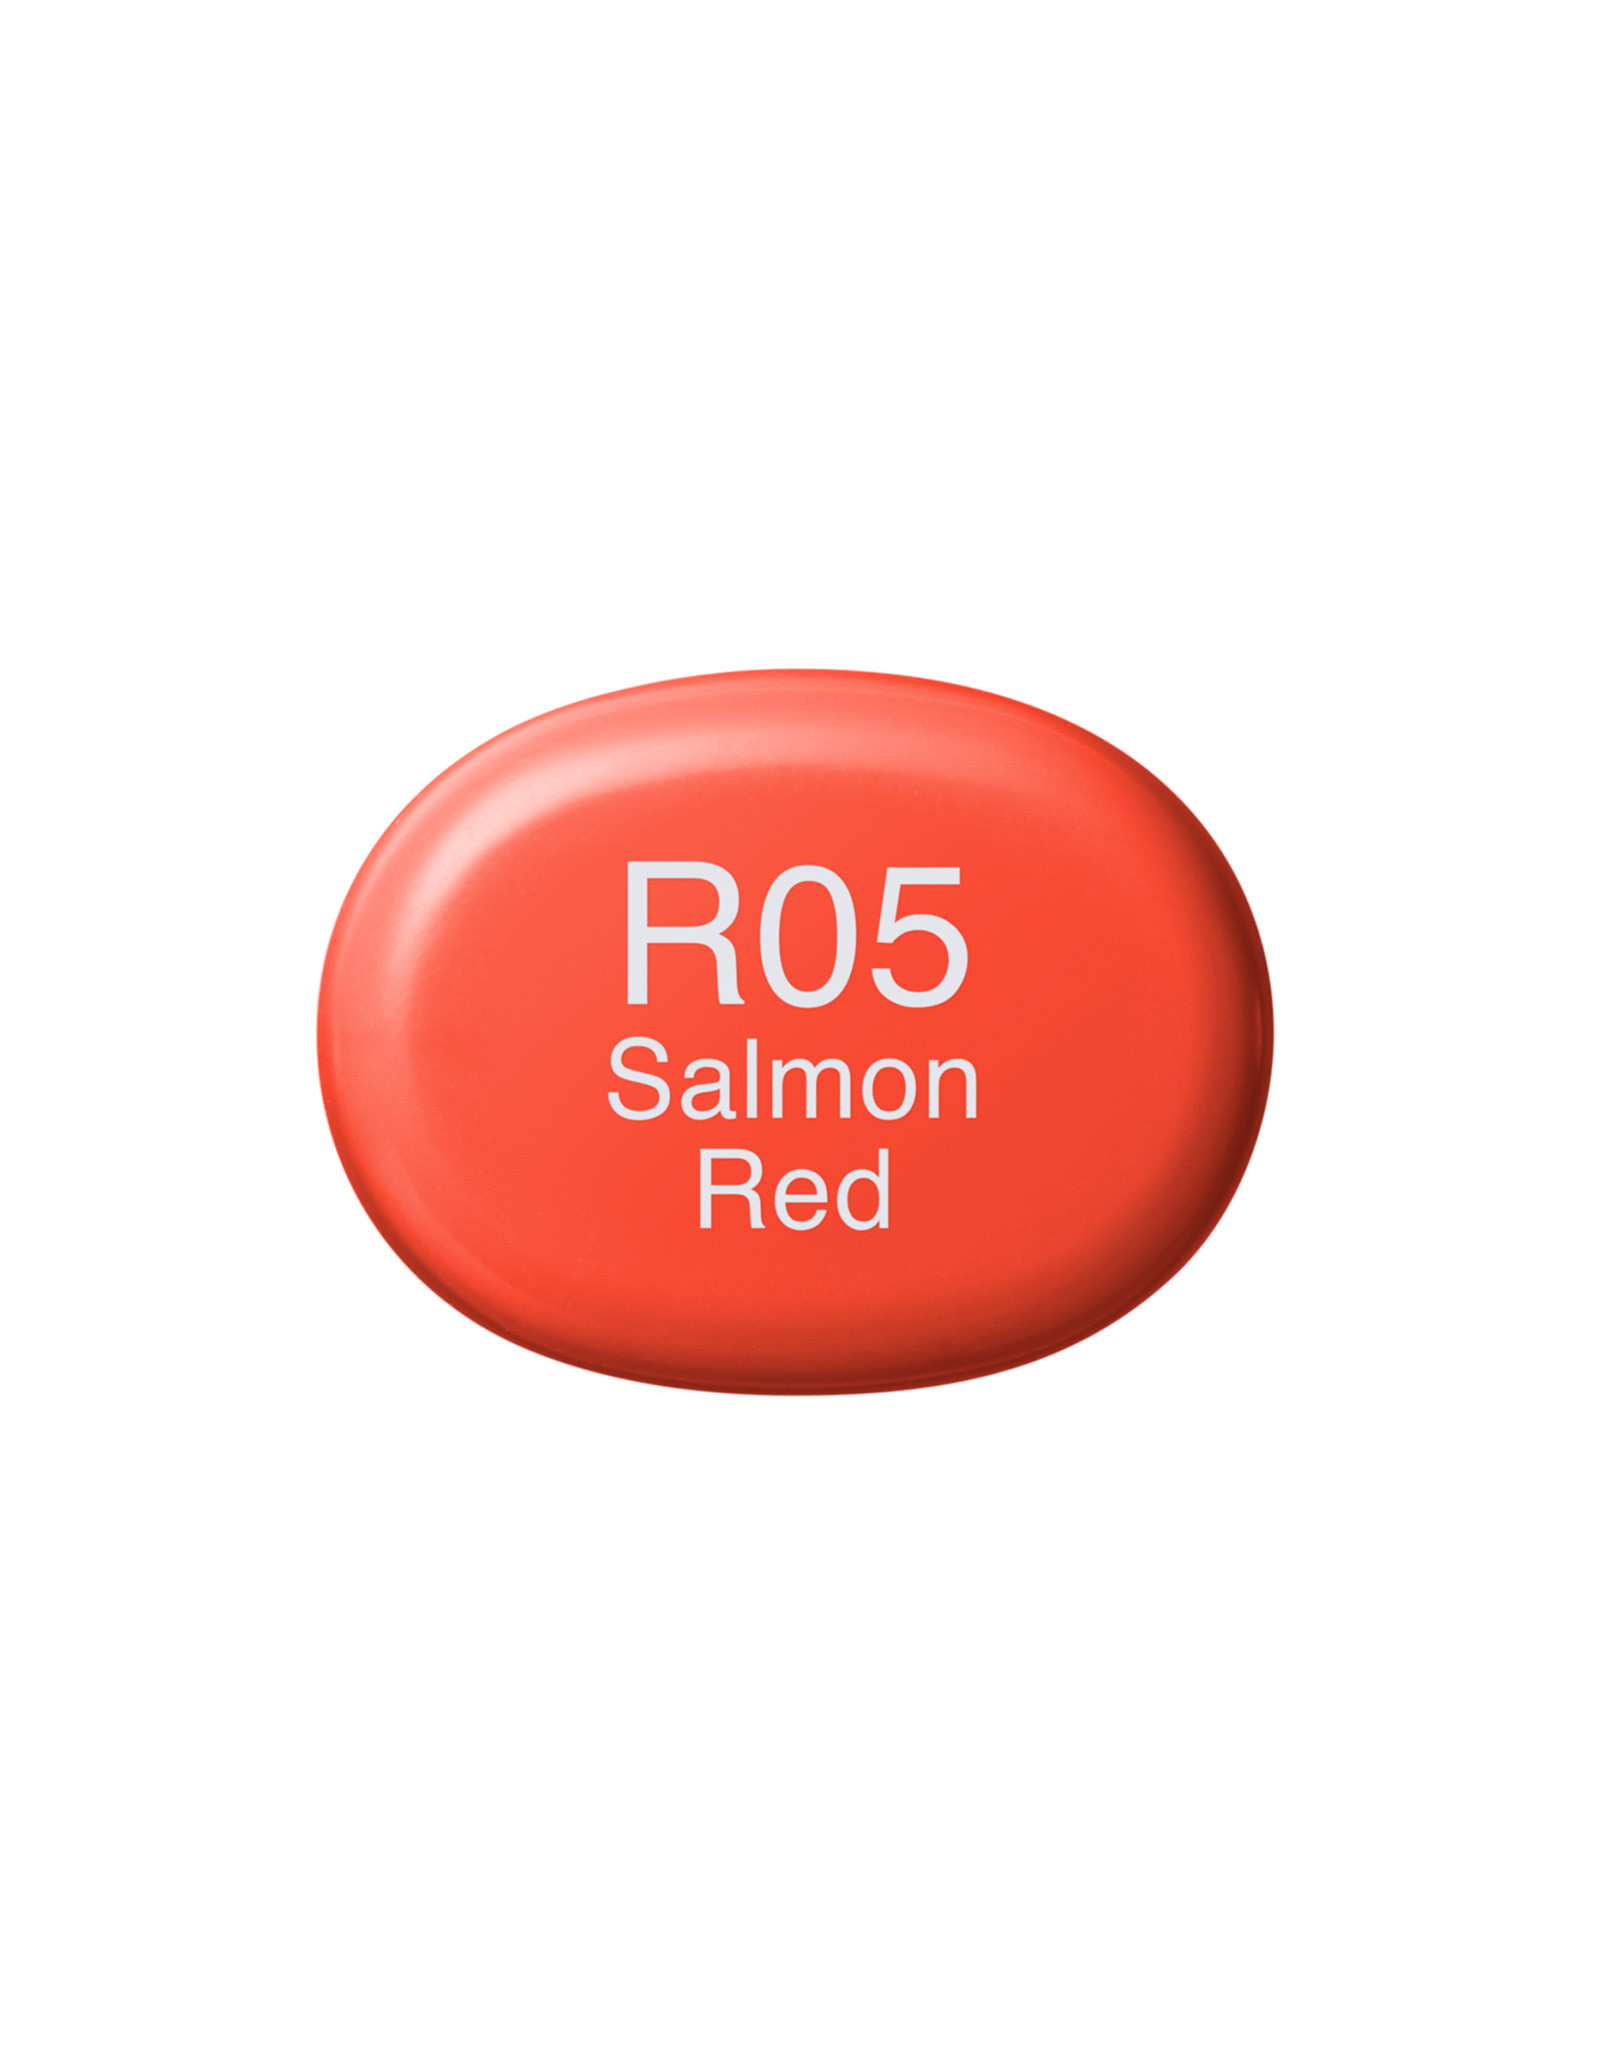 COPIC COPIC Sketch Marker R05 Salmon Red